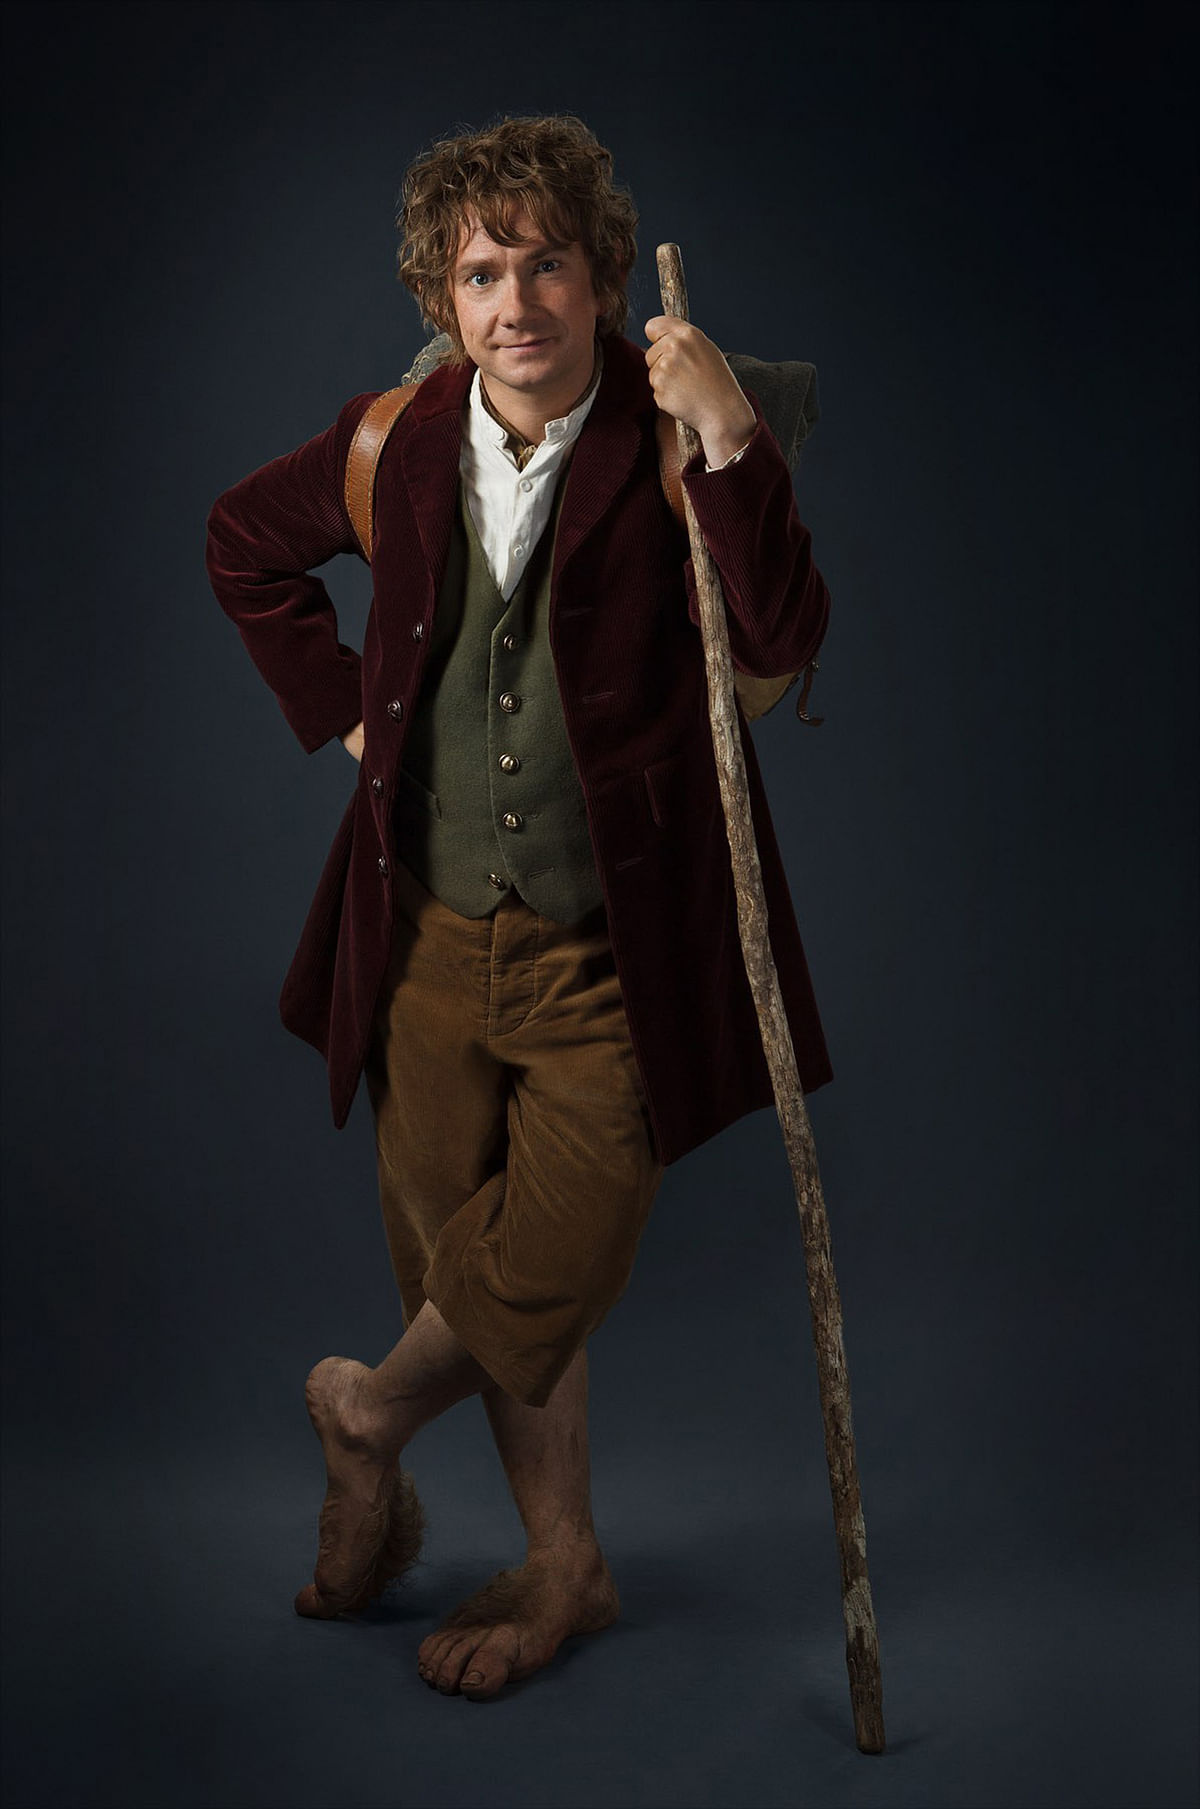 Bilbo Baggins costume